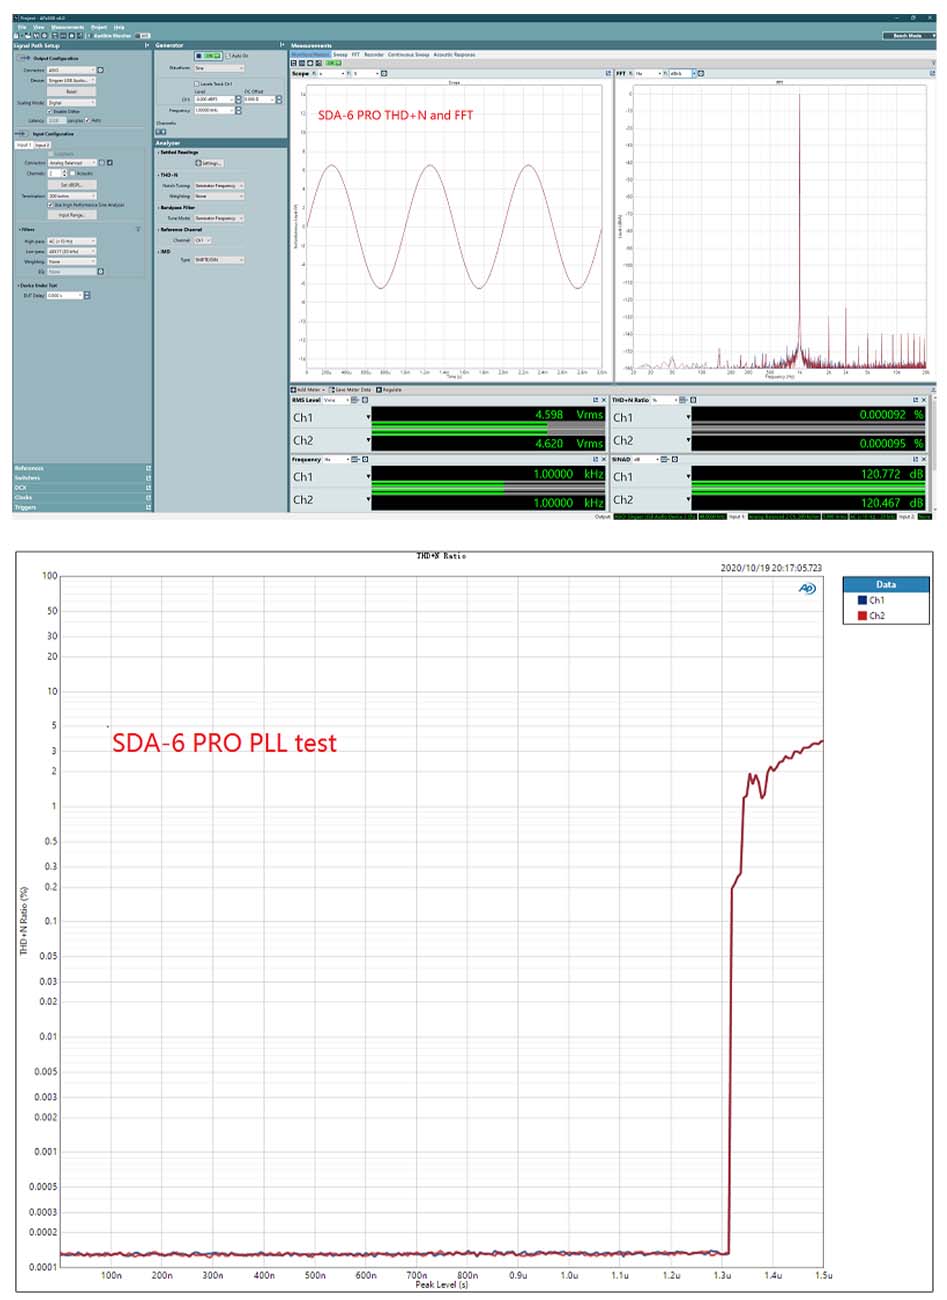 SDA-6 PRO2 test measurements